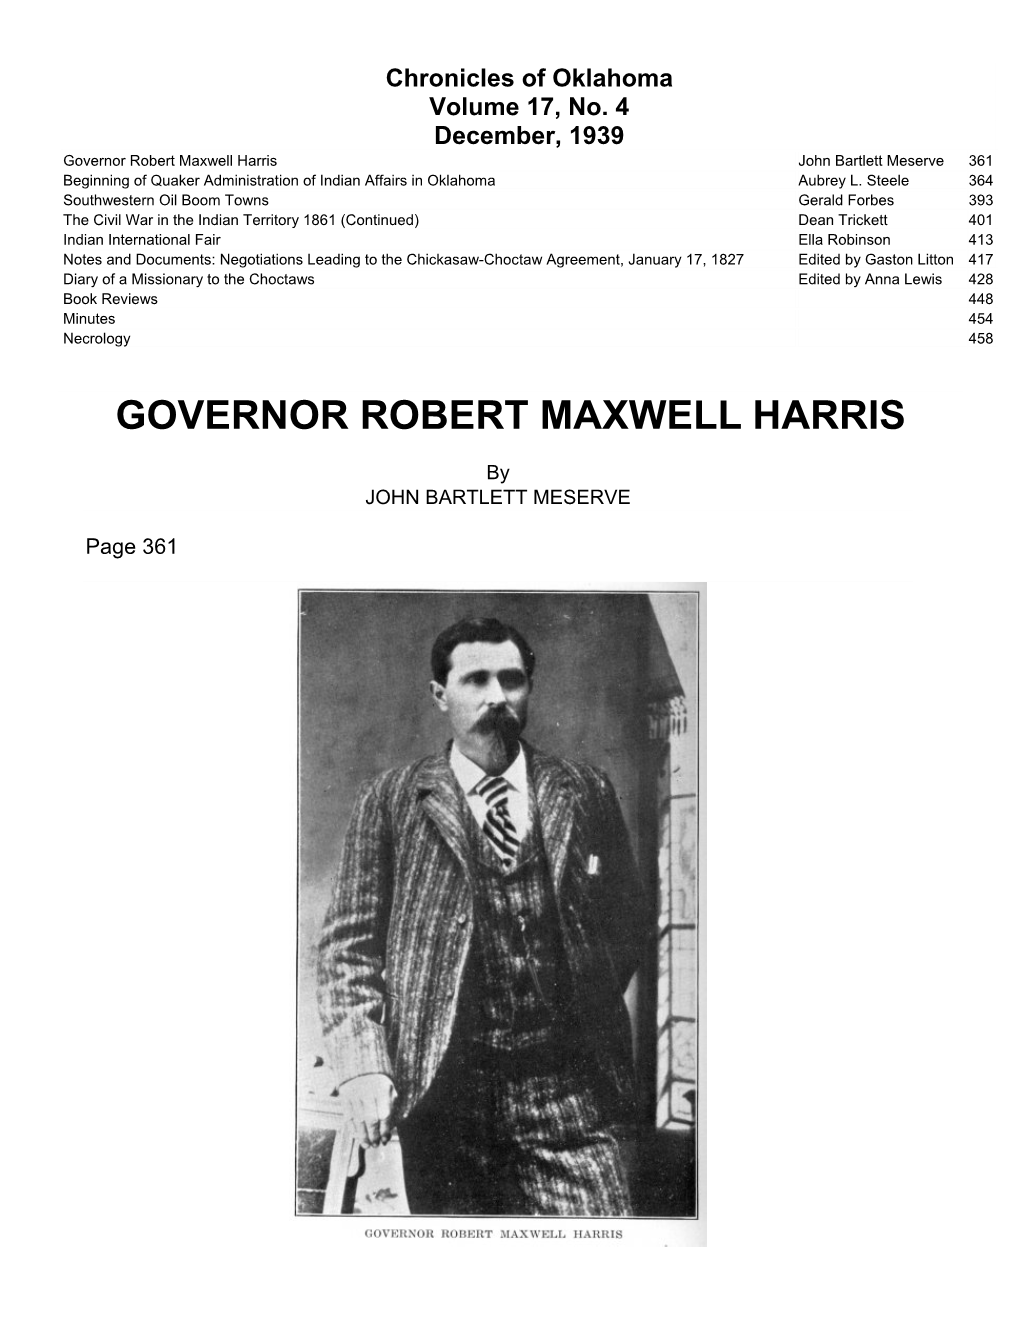 Governor Robert Maxwell Harris John Bartlett Meserve 361 Beginning of Quaker Administration of Indian Affairs in Oklahoma Aubrey L